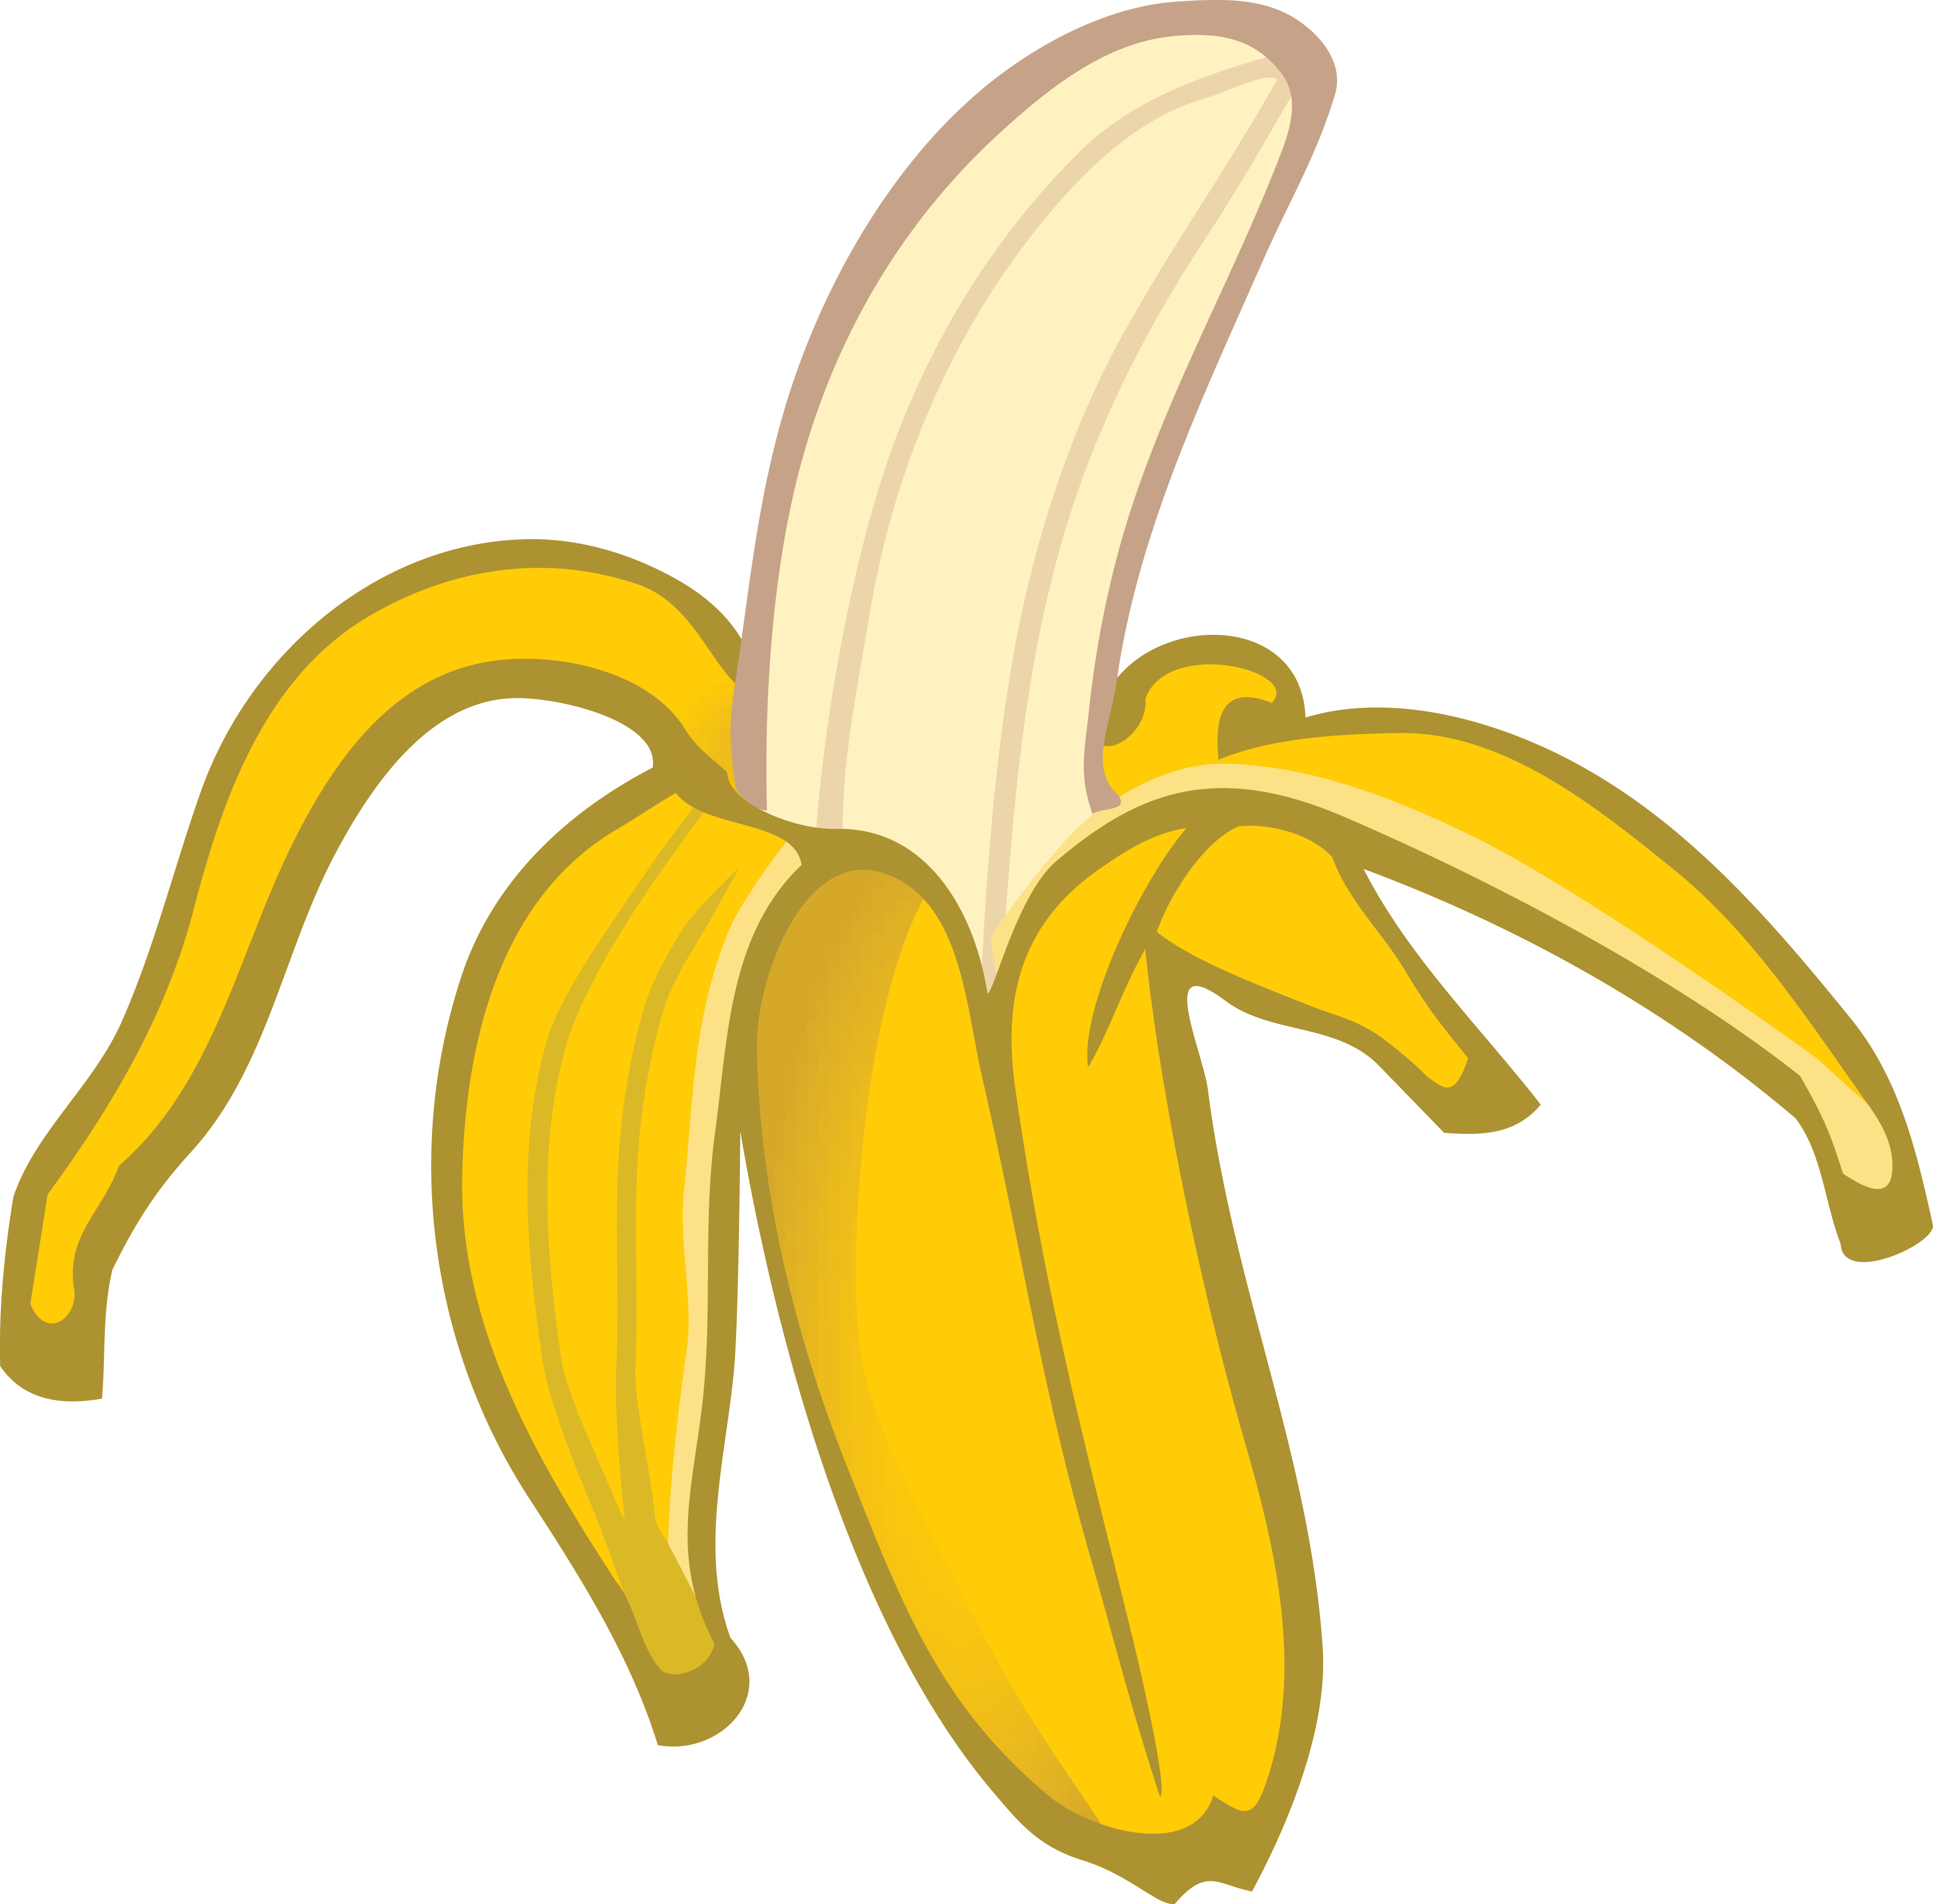 1636 Free Clipart Of A Banana